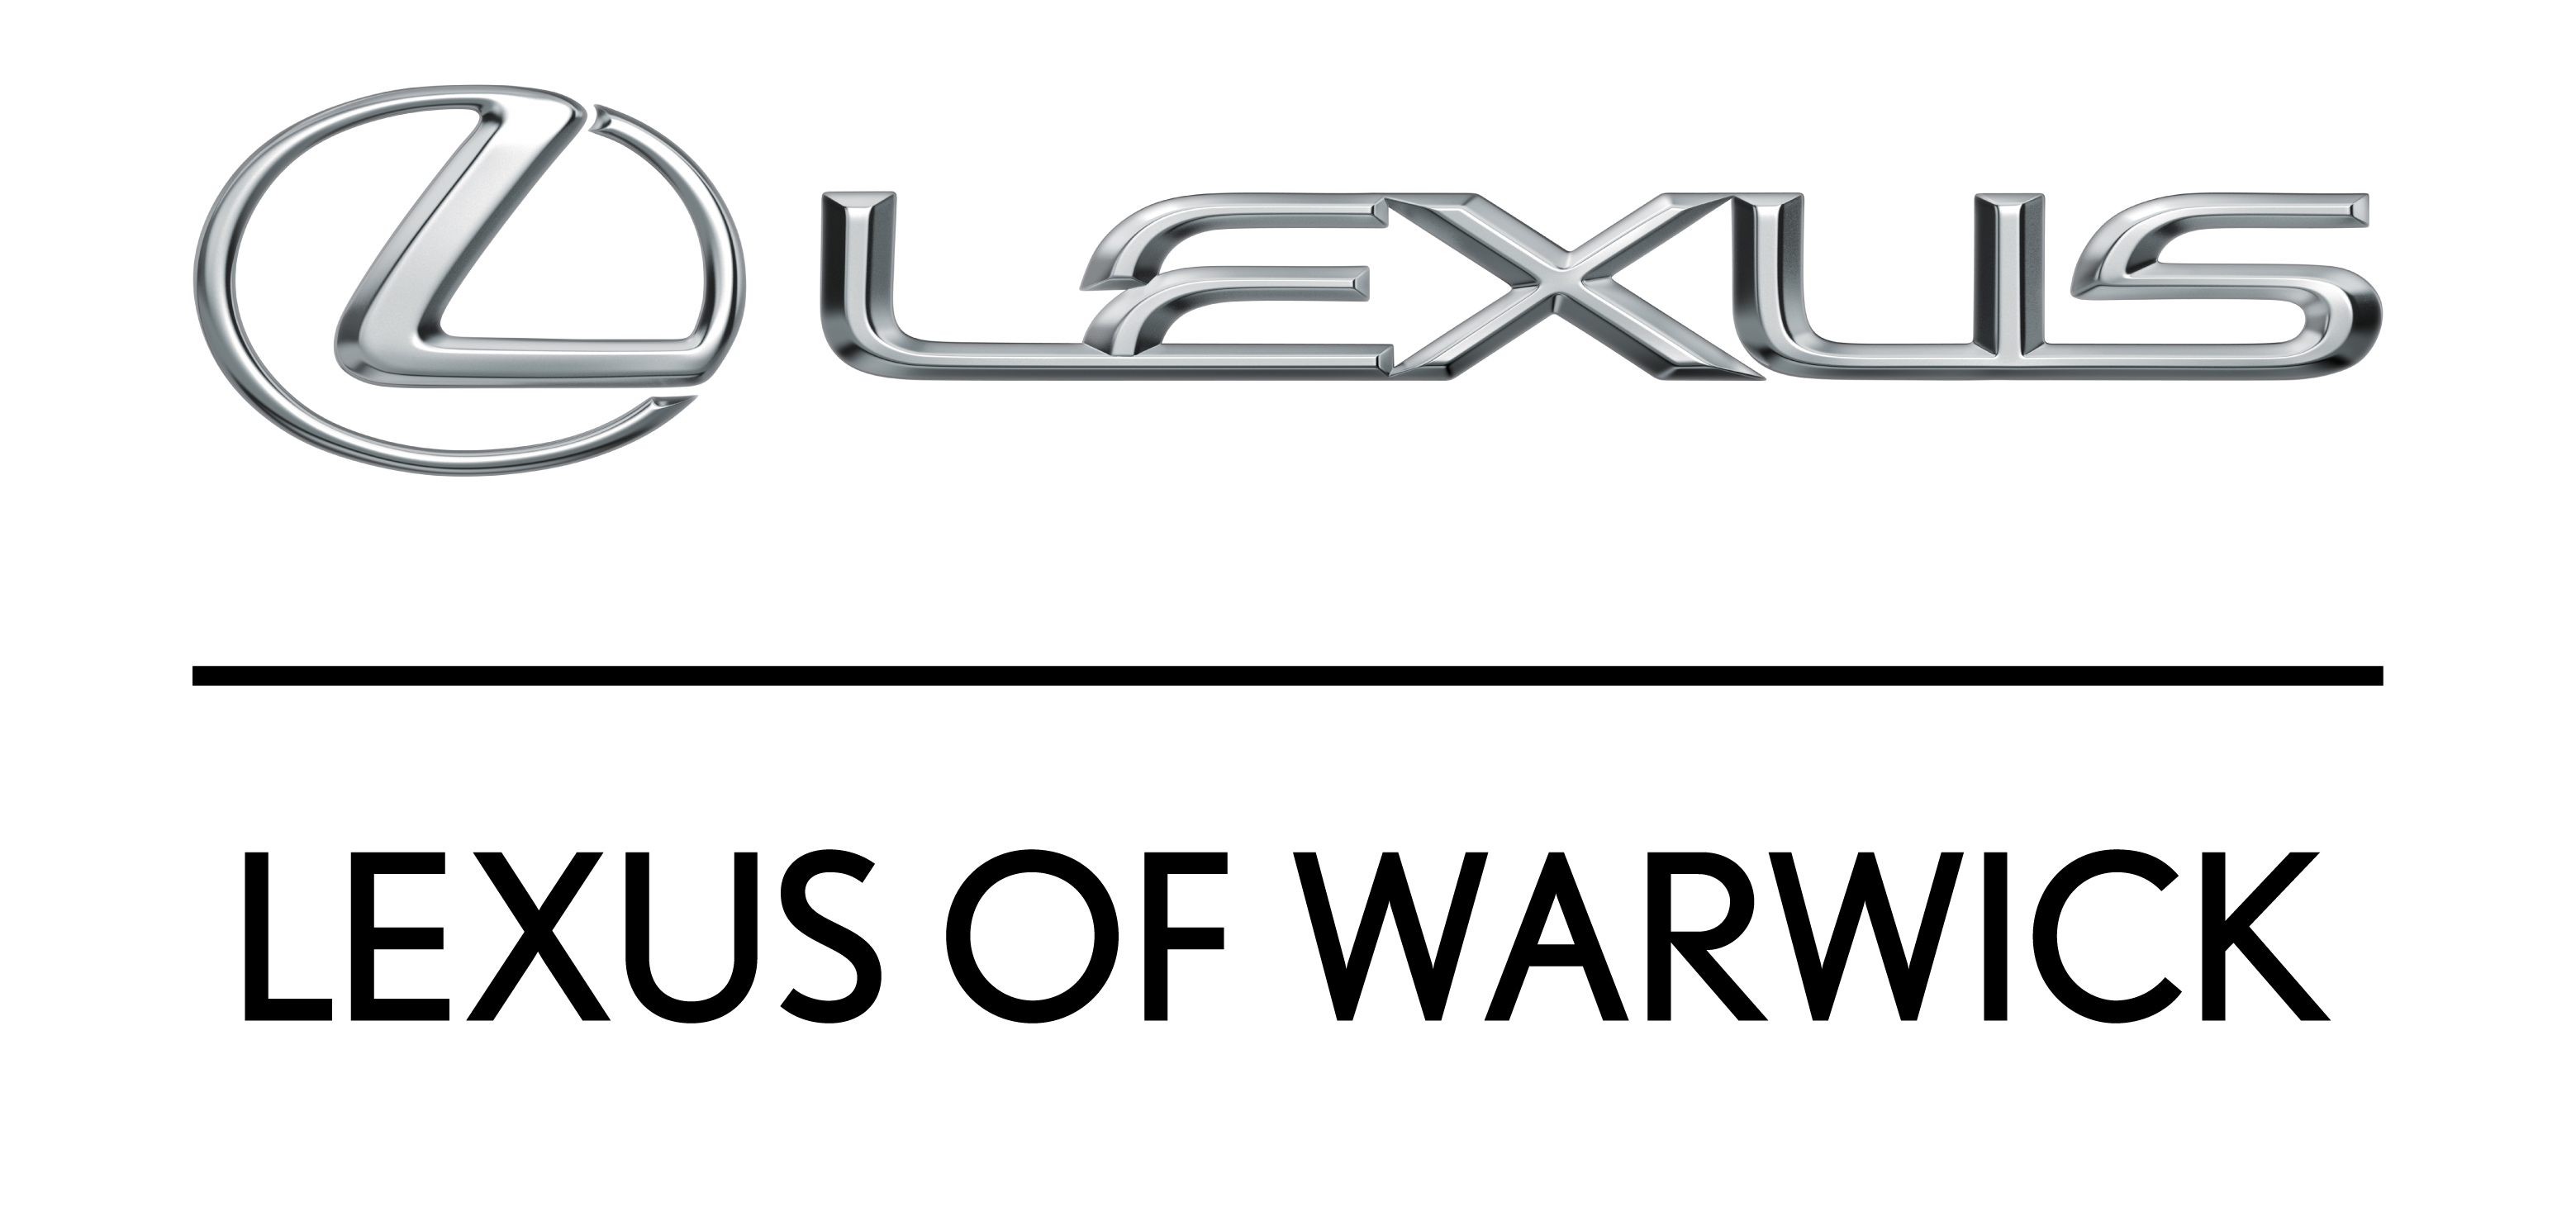 Lexus of Warwick horizontal